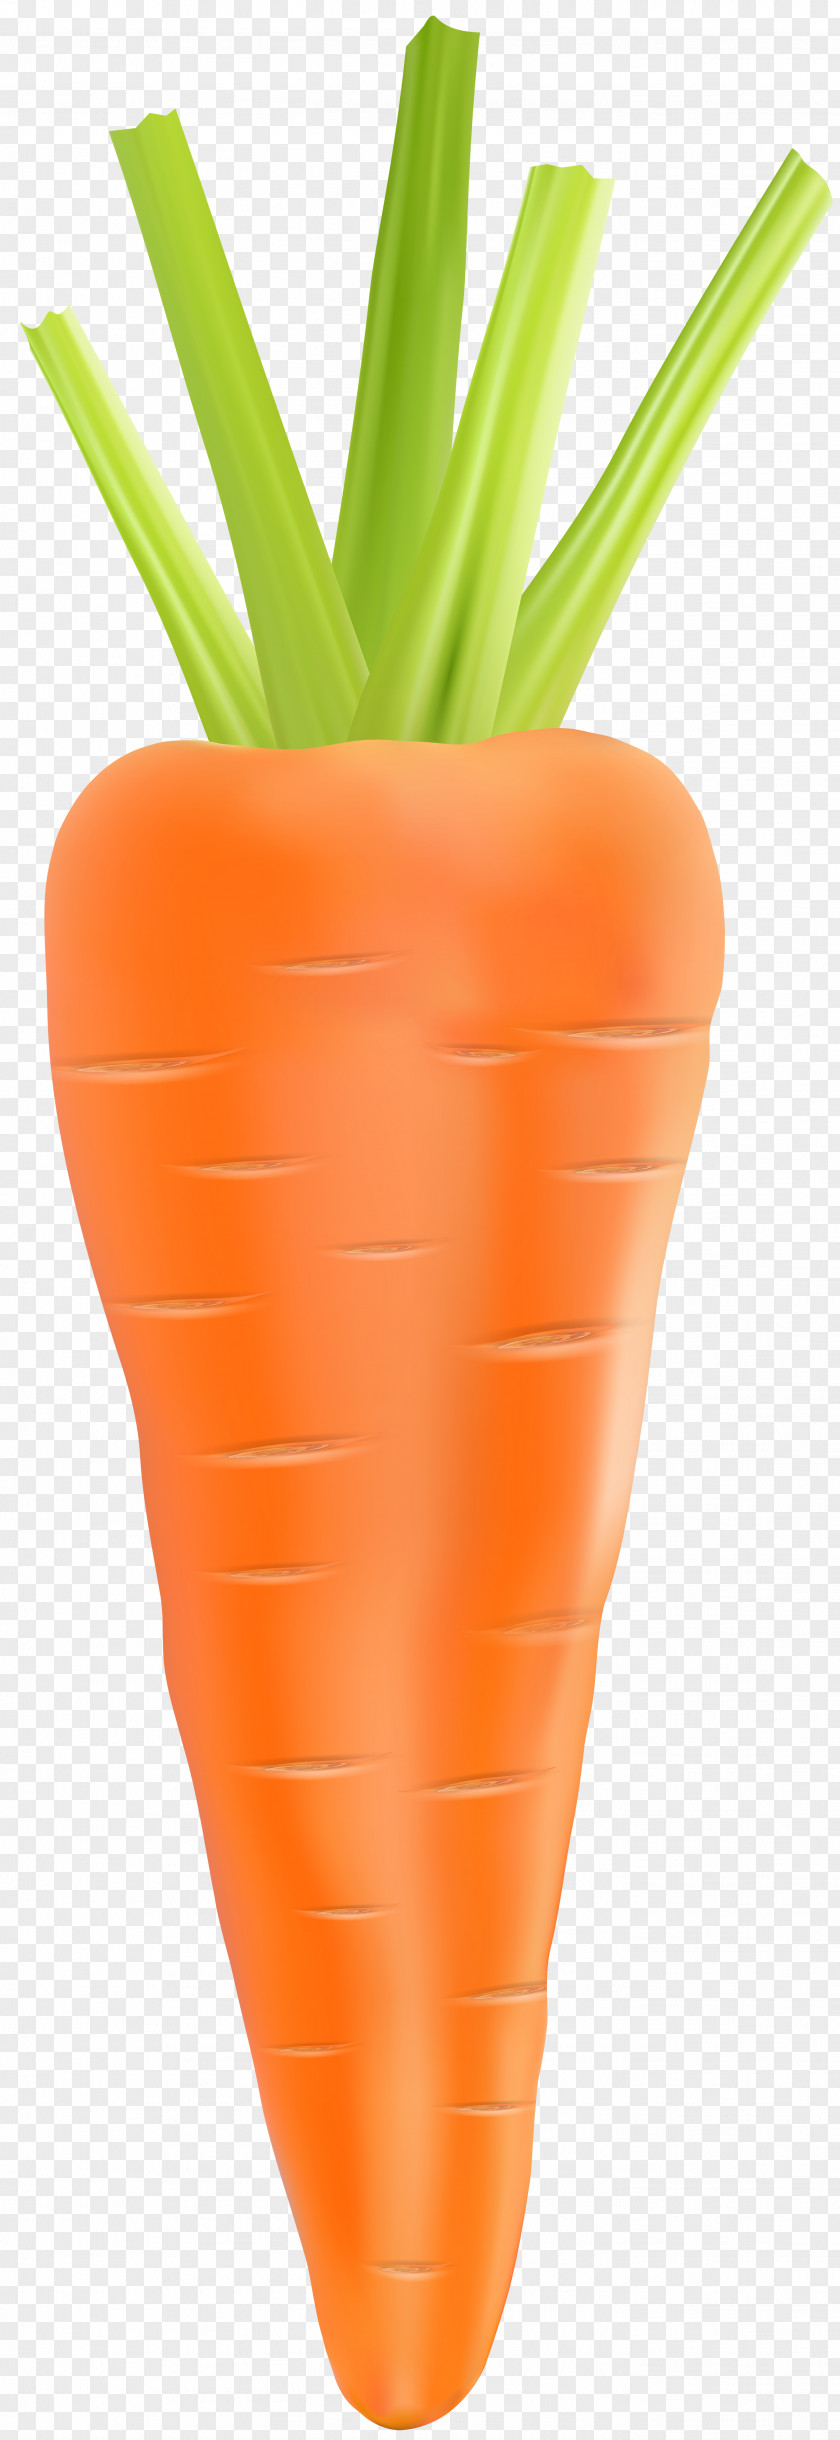 Carrot Transparent Clip Art Image Vegetable PNG